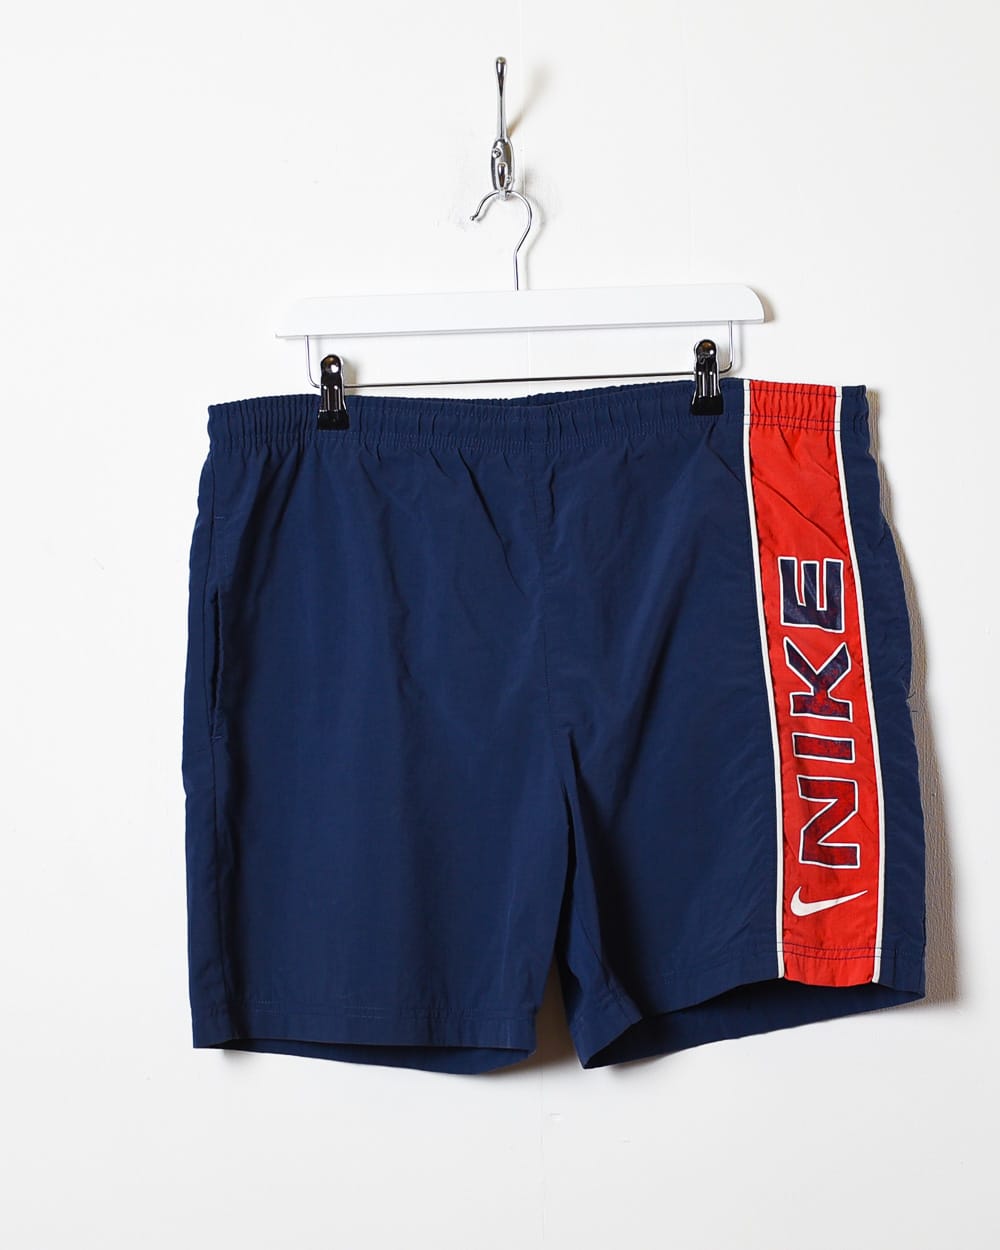 Navy Nike Mesh Shorts - Medium